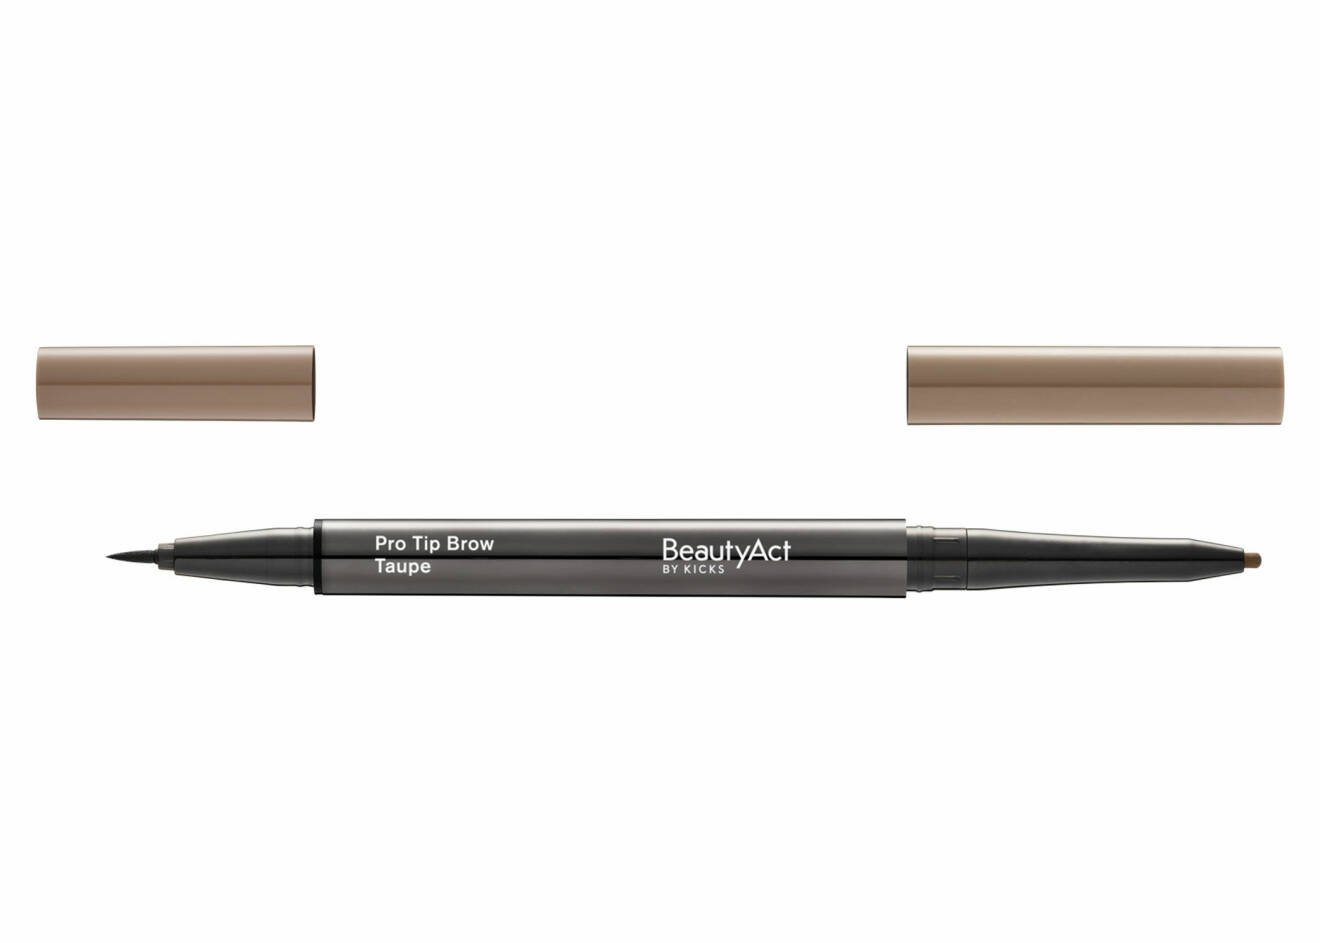 Pro Tip Brow Eyebrow Pencil från Beauty Act.